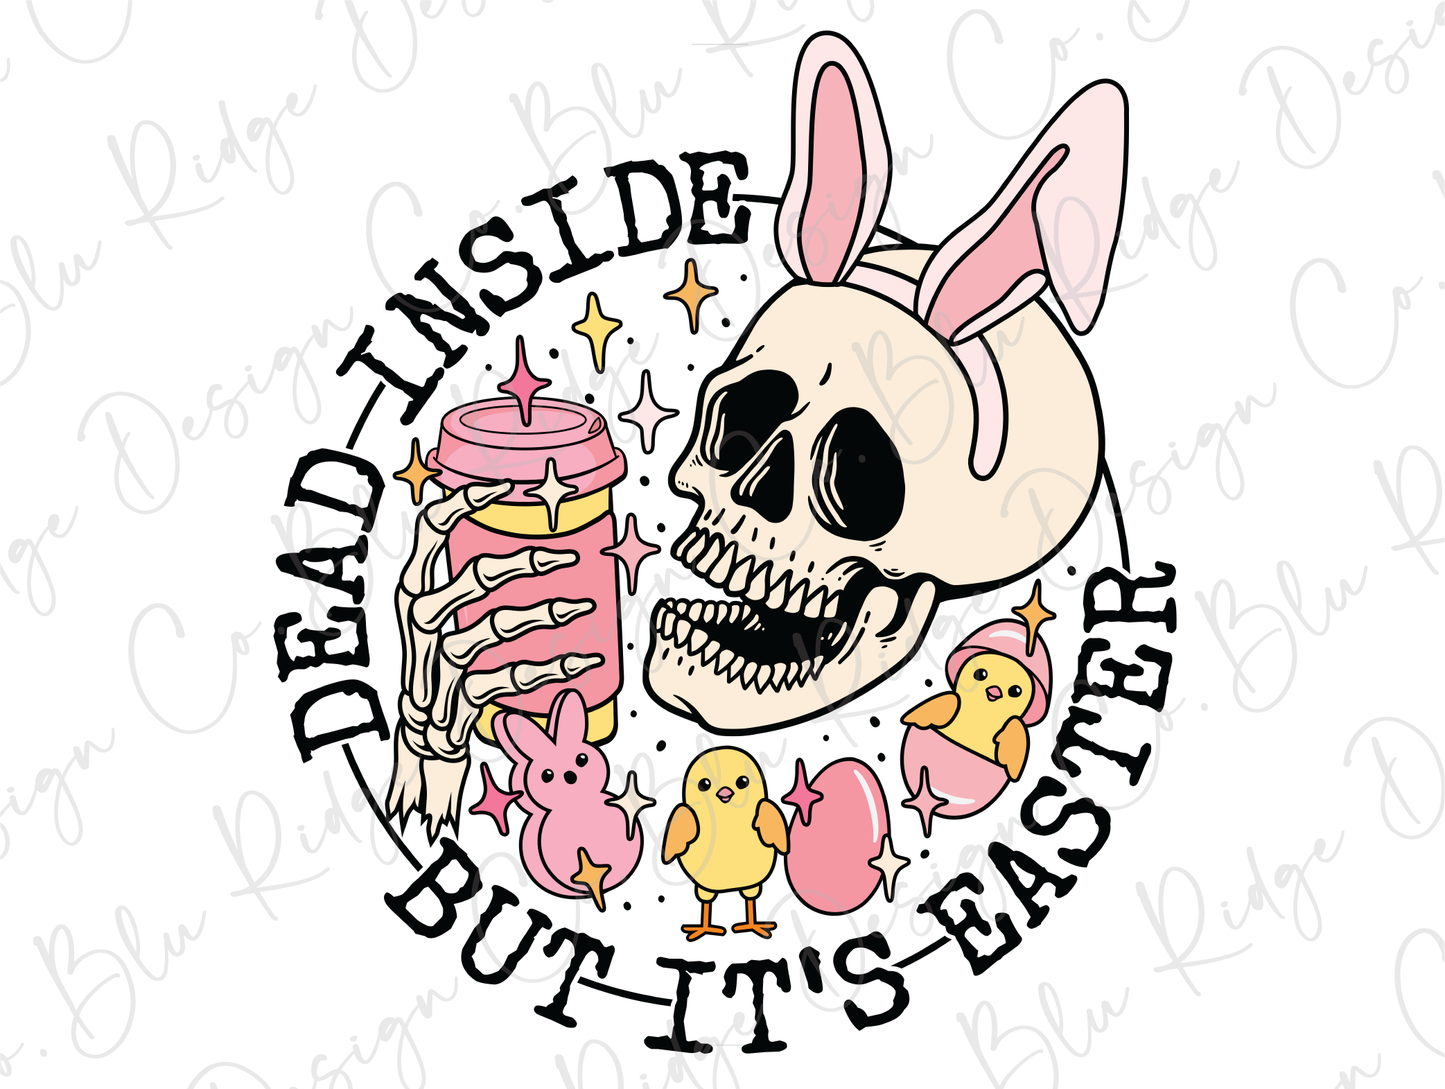 Dead Inside But It's Easter Skeleton Drinking Direct To Film (DTF) Transfer